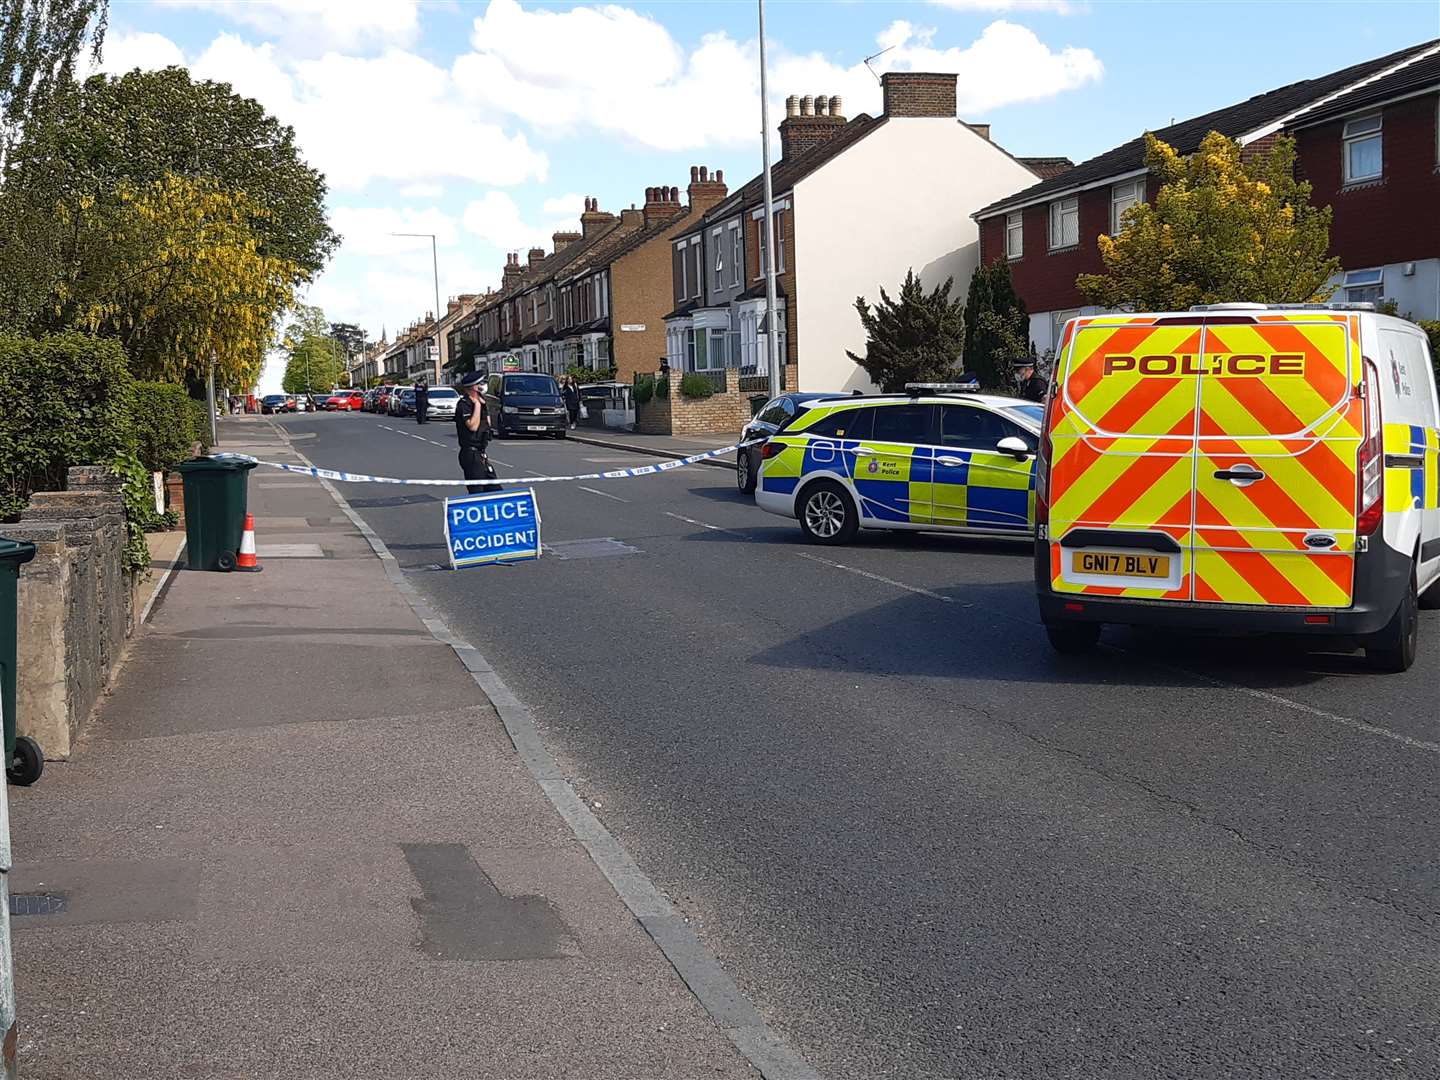 Police in Dartford Road, Dartford last week